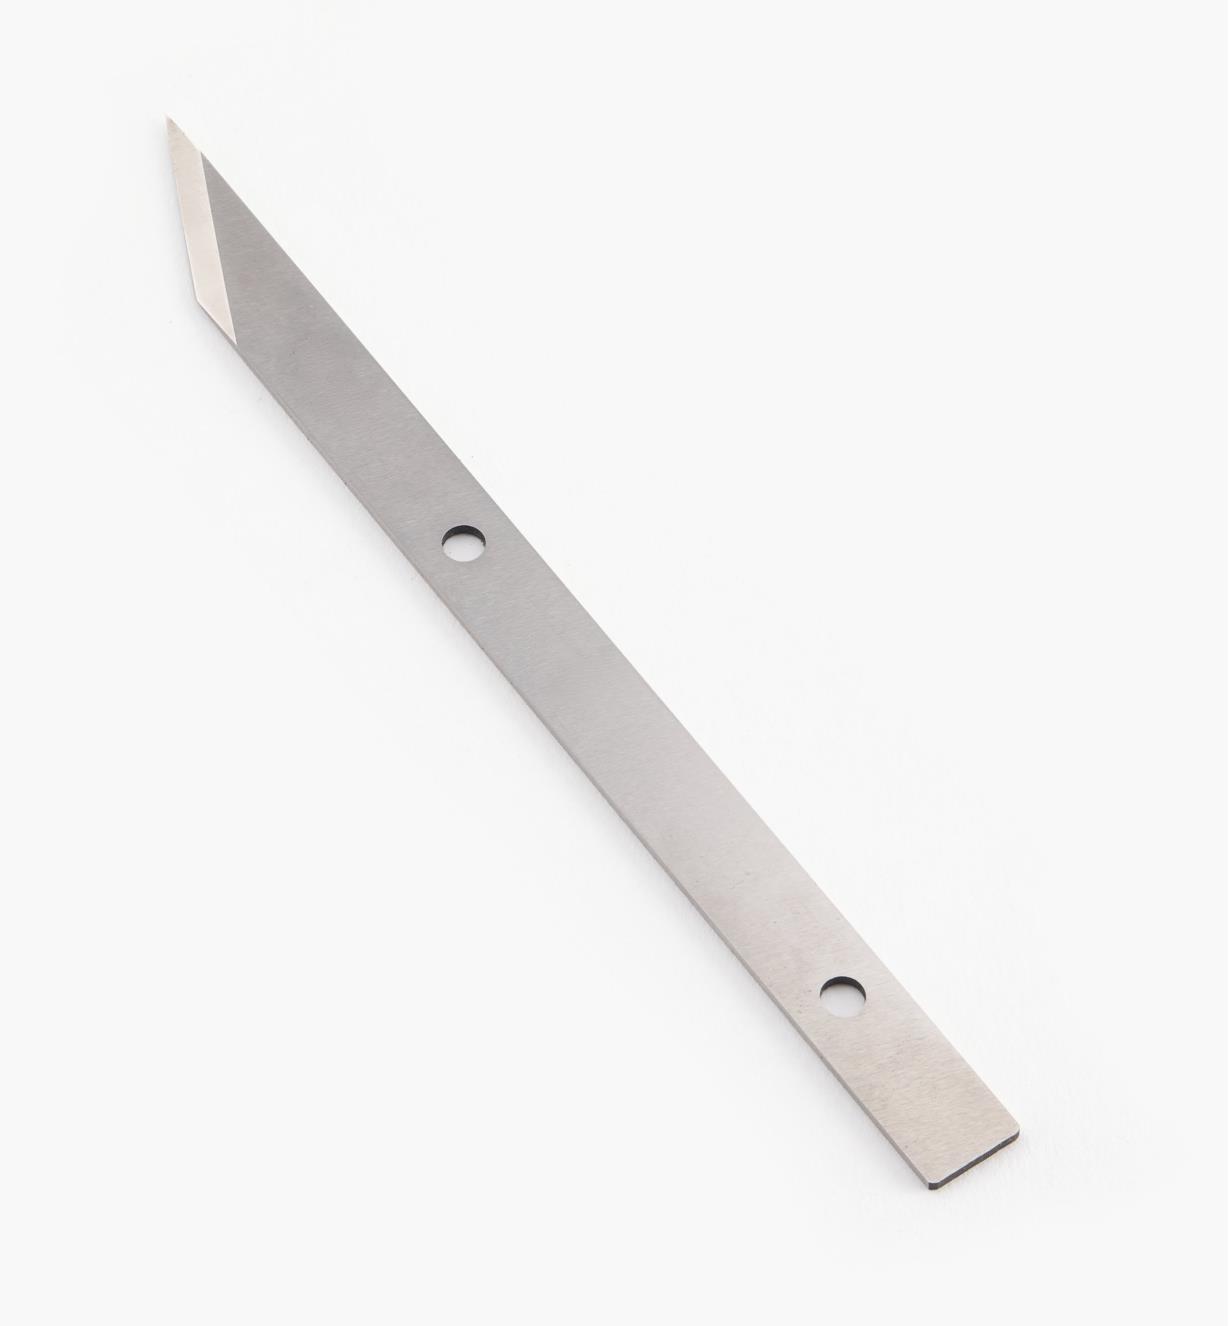 19P2430 - 1/2" × 7" Violin Knife Blade